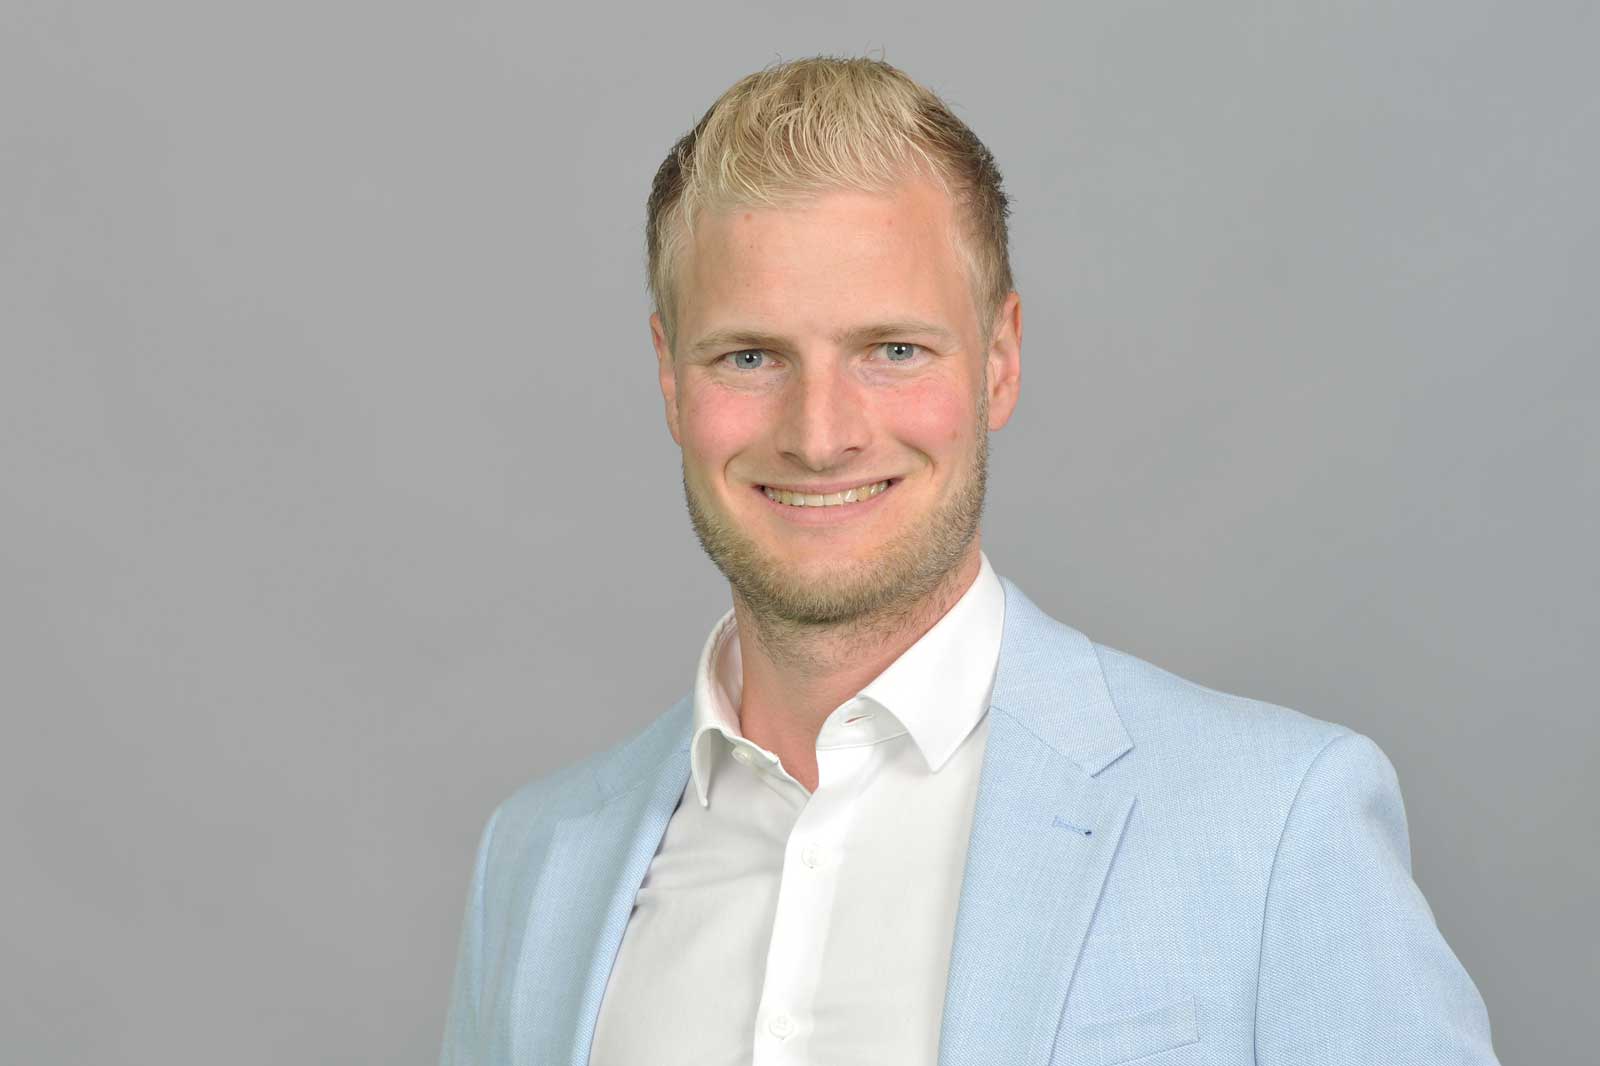 Dustin Vennemann | Project Manager @ RWE Technology GmbH